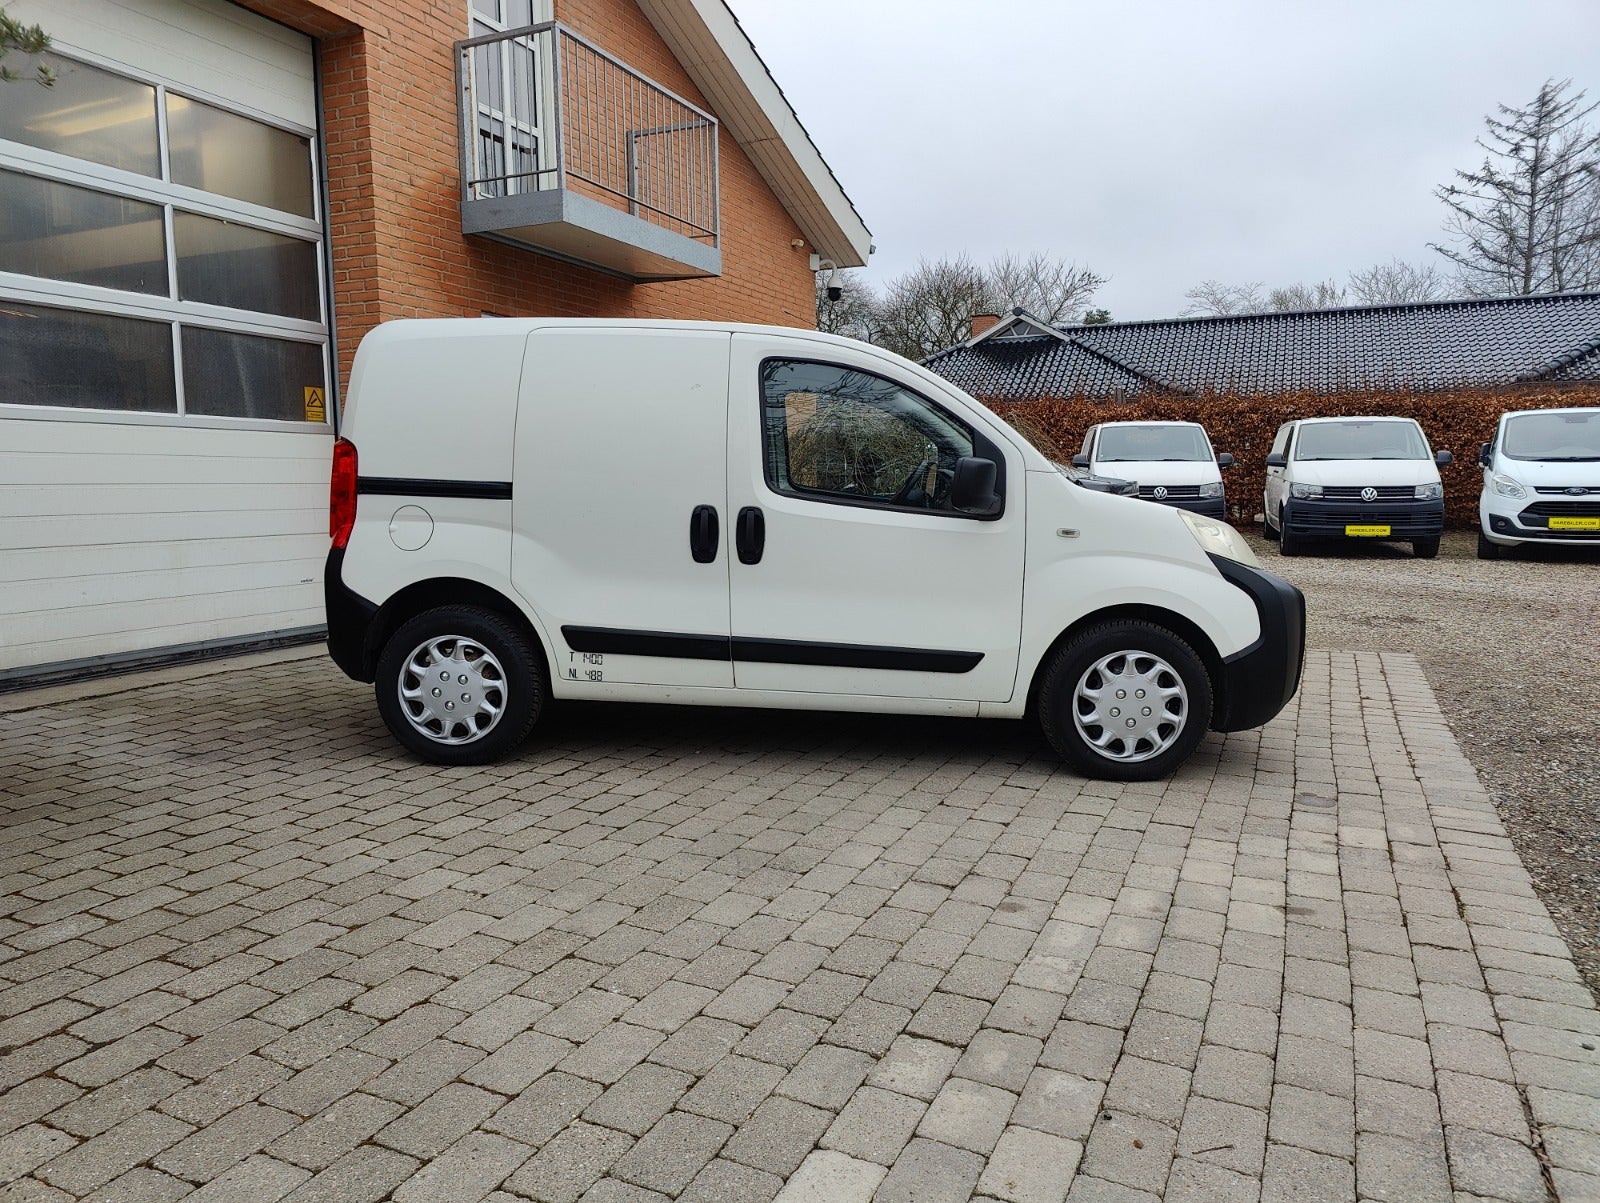 Fiat Fiorino 1,3 MJT 75 Basic Van Diesel modelår 2013 Hvid km